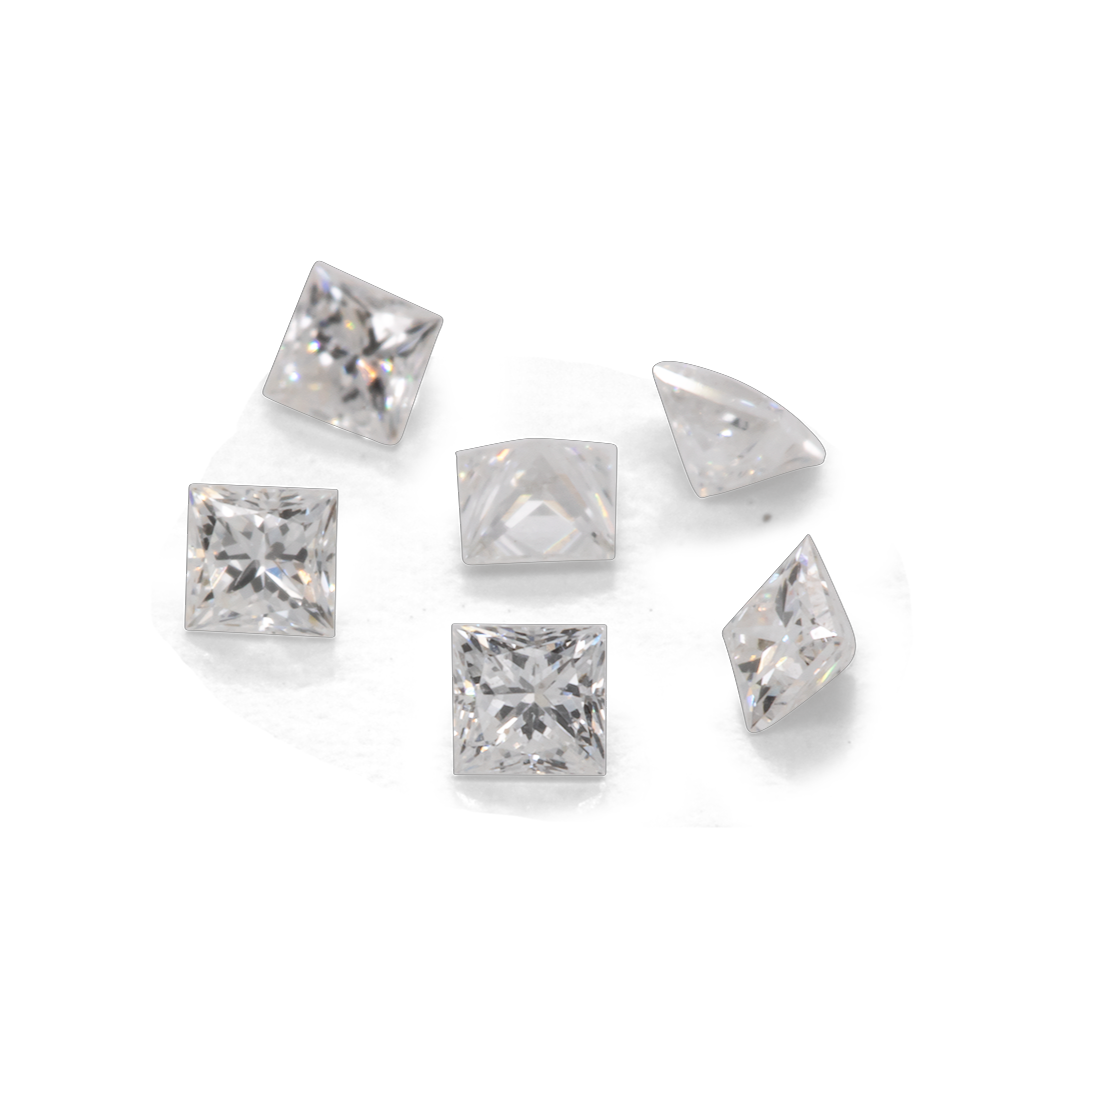 Diamond - fine white, FL, princess cut, 1.8x1.8 mm, approx. 0.04 cts, No. D50001